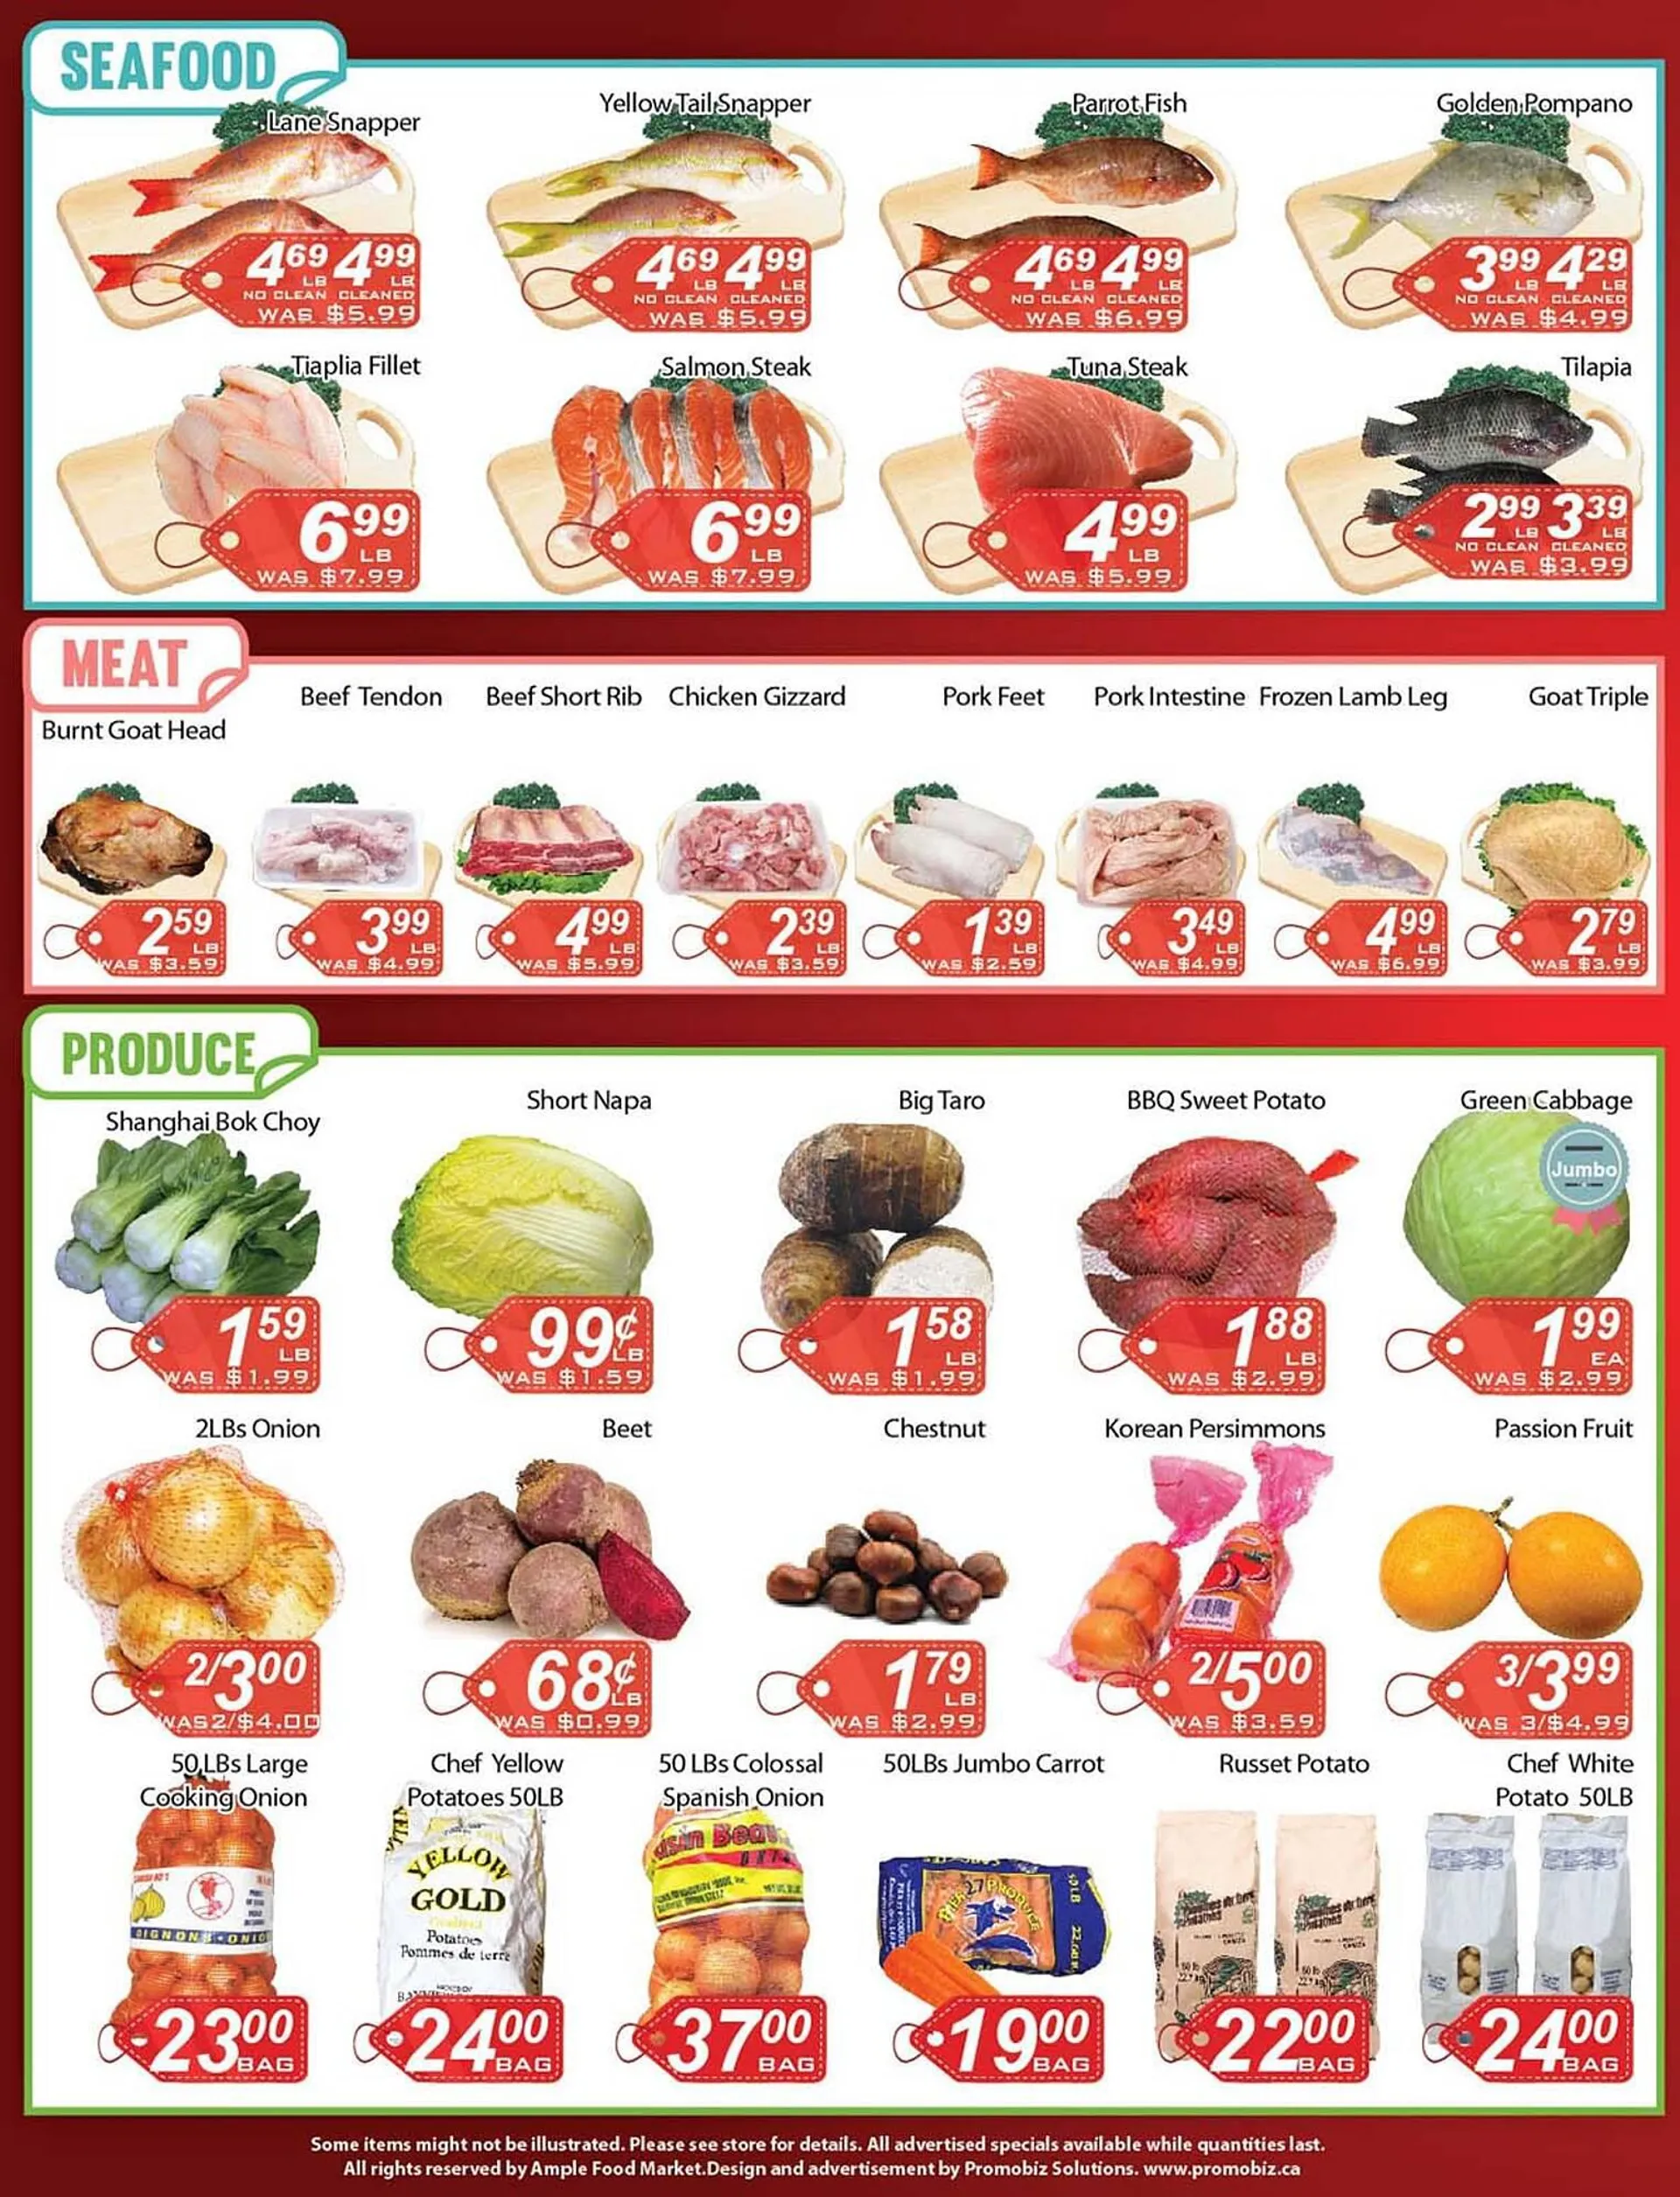 Ample Food Market flyer - 2